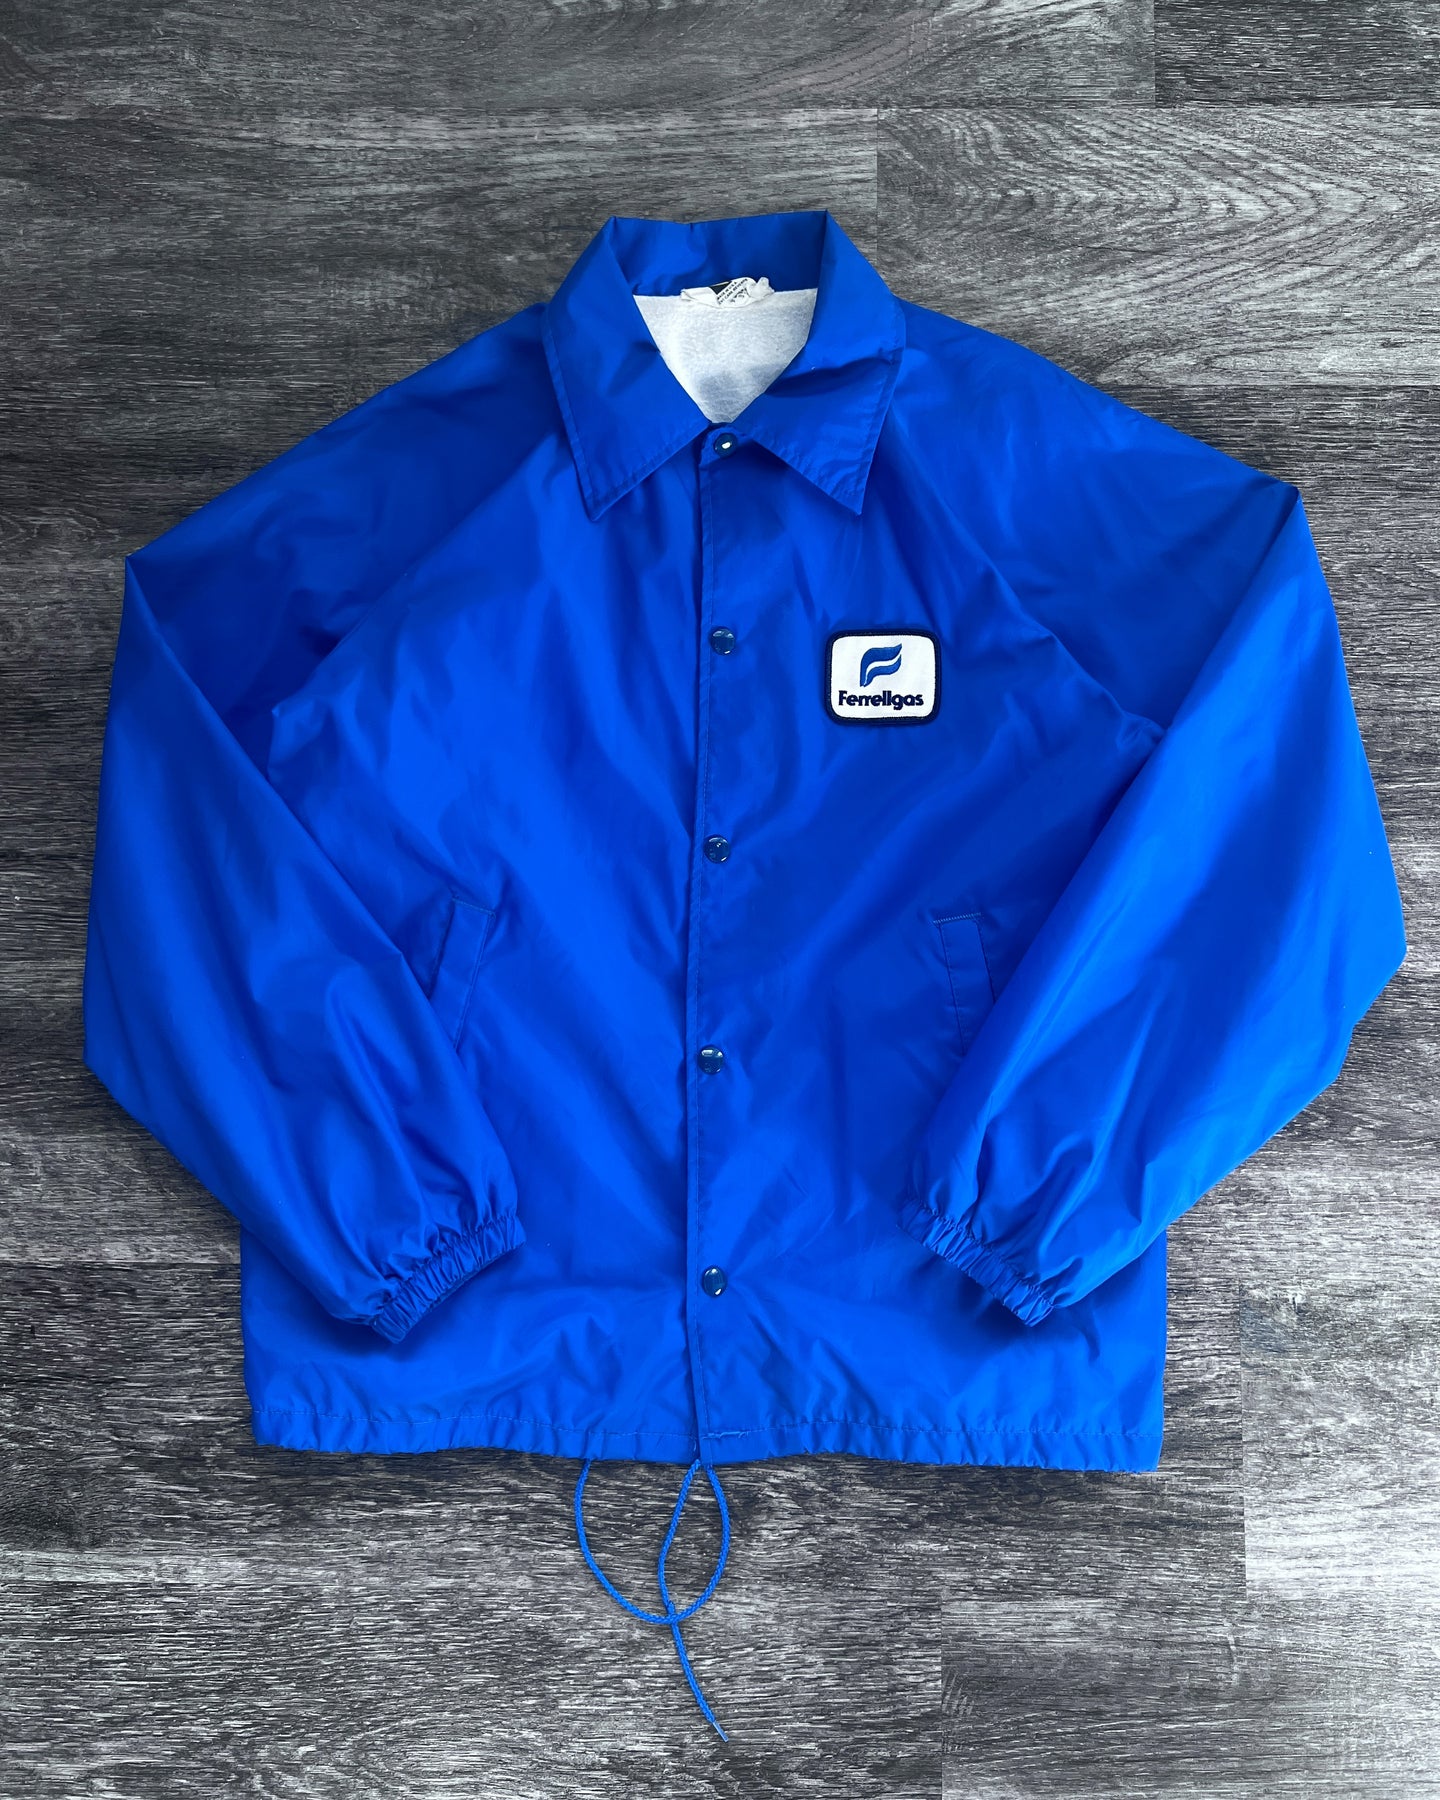 1980s Ferrellgas Royal Blue Coach Jacket - Size Large